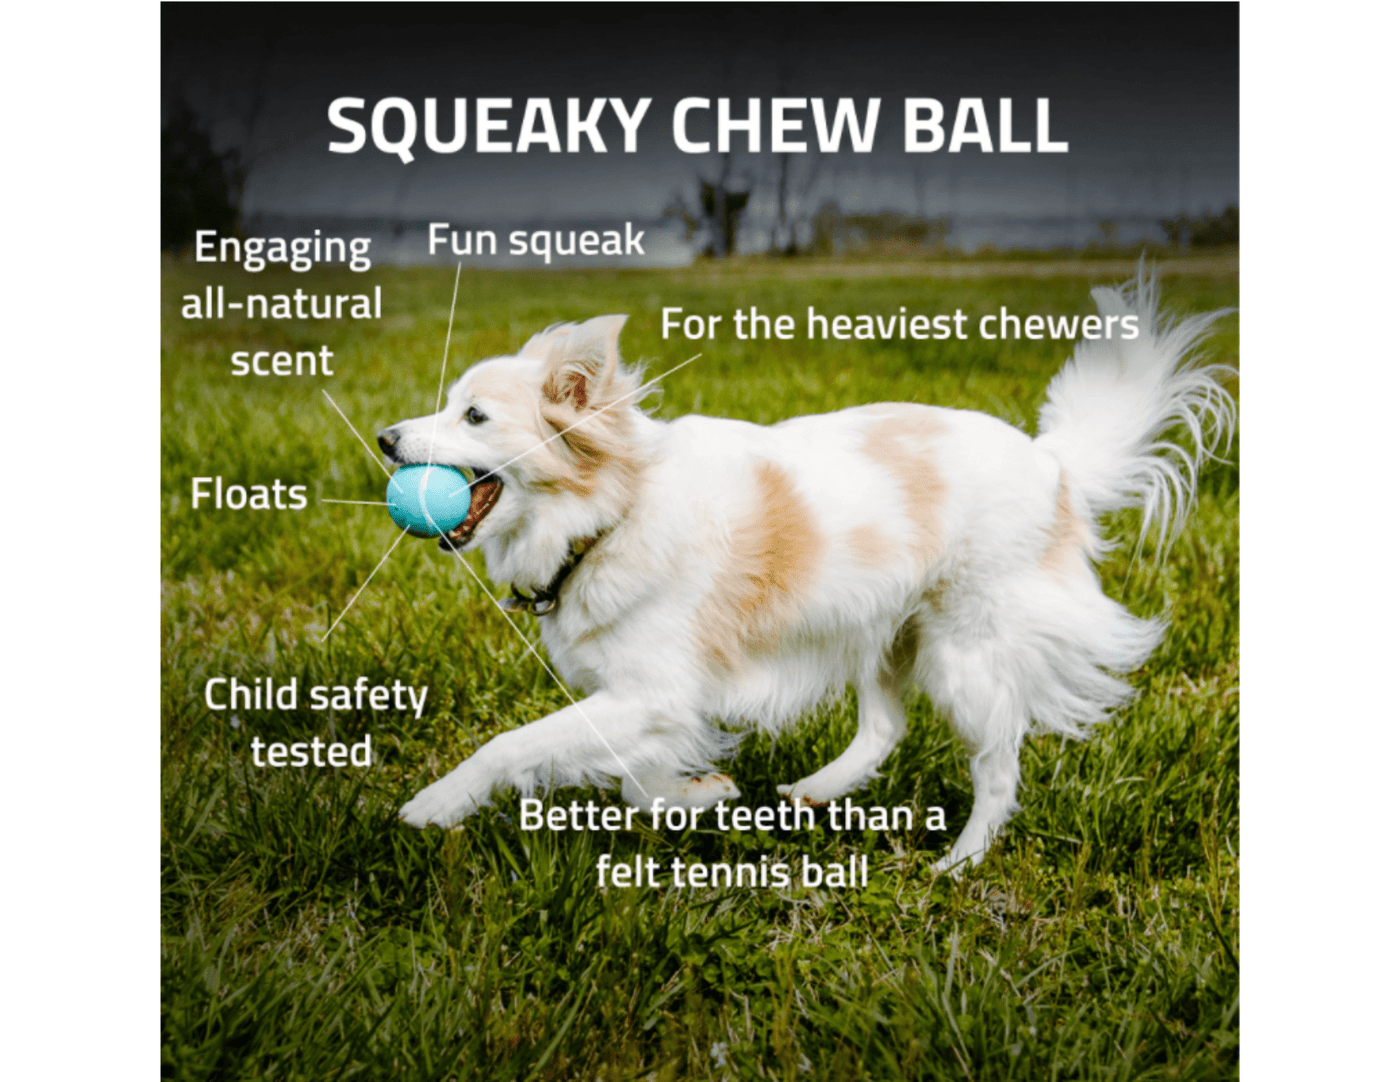 Squeaky Chew Ball - Playology Medium - PetToba-Playology